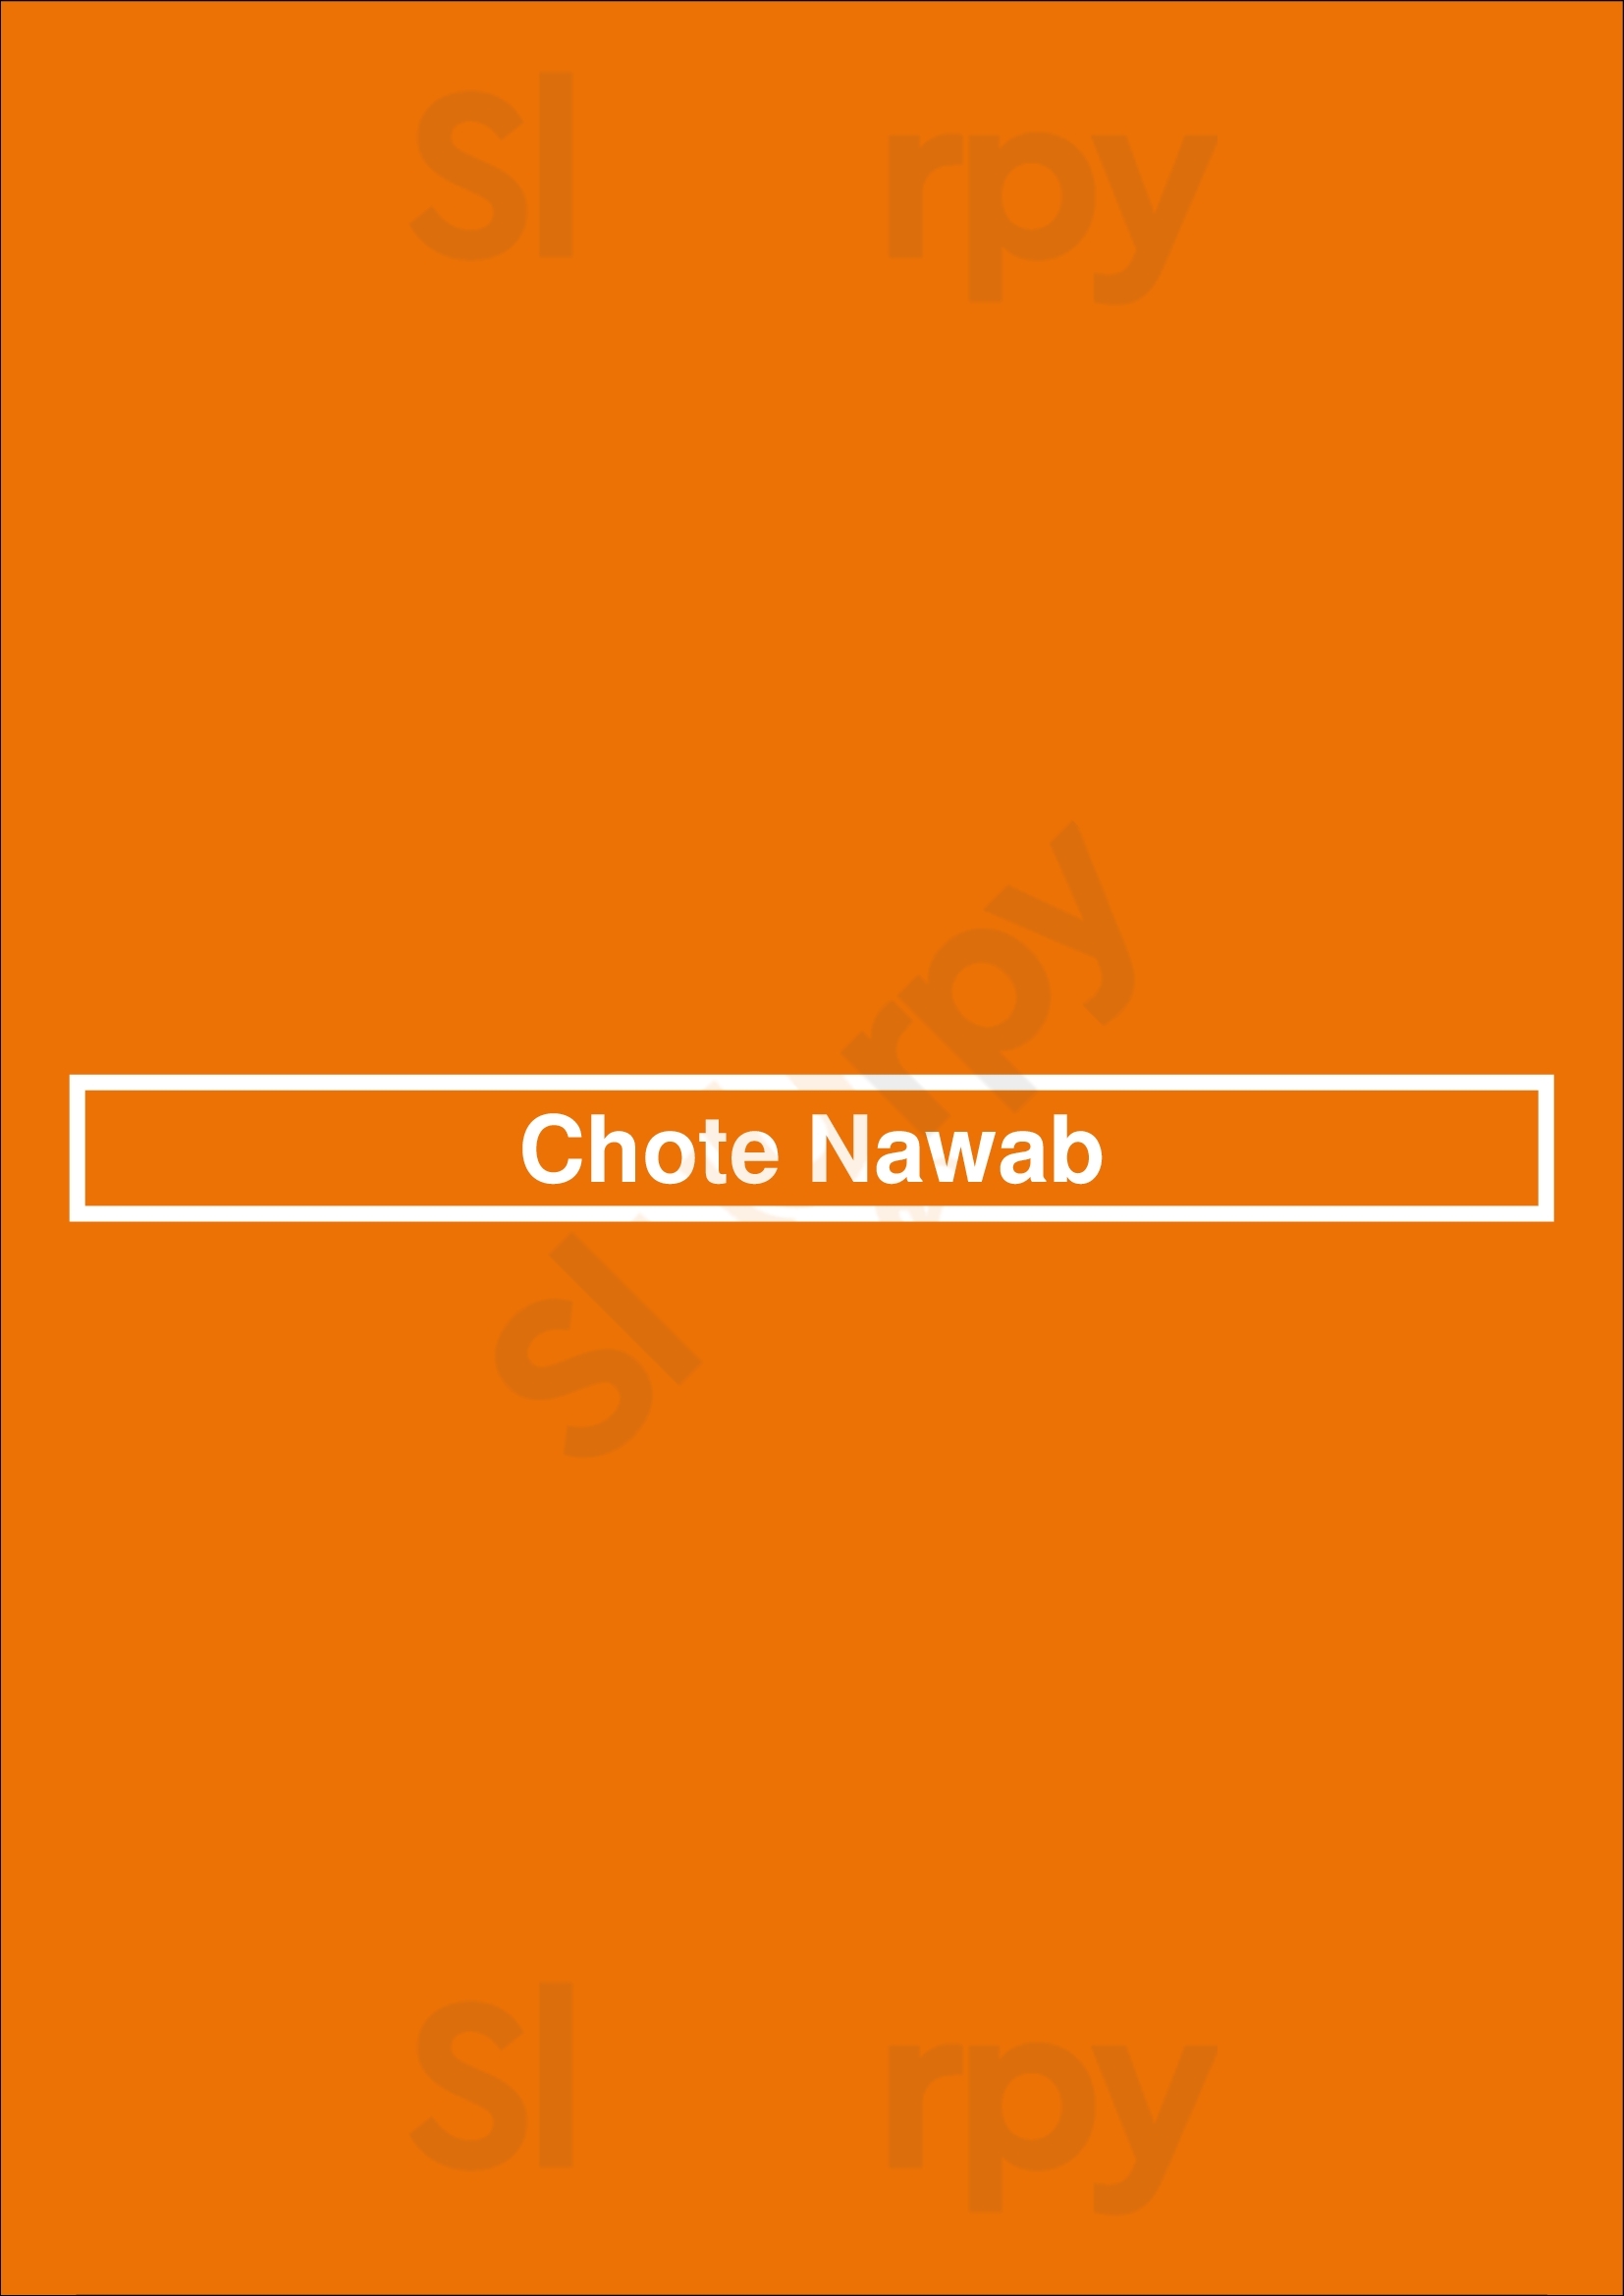 Chote Nawab New York City Menu - 1